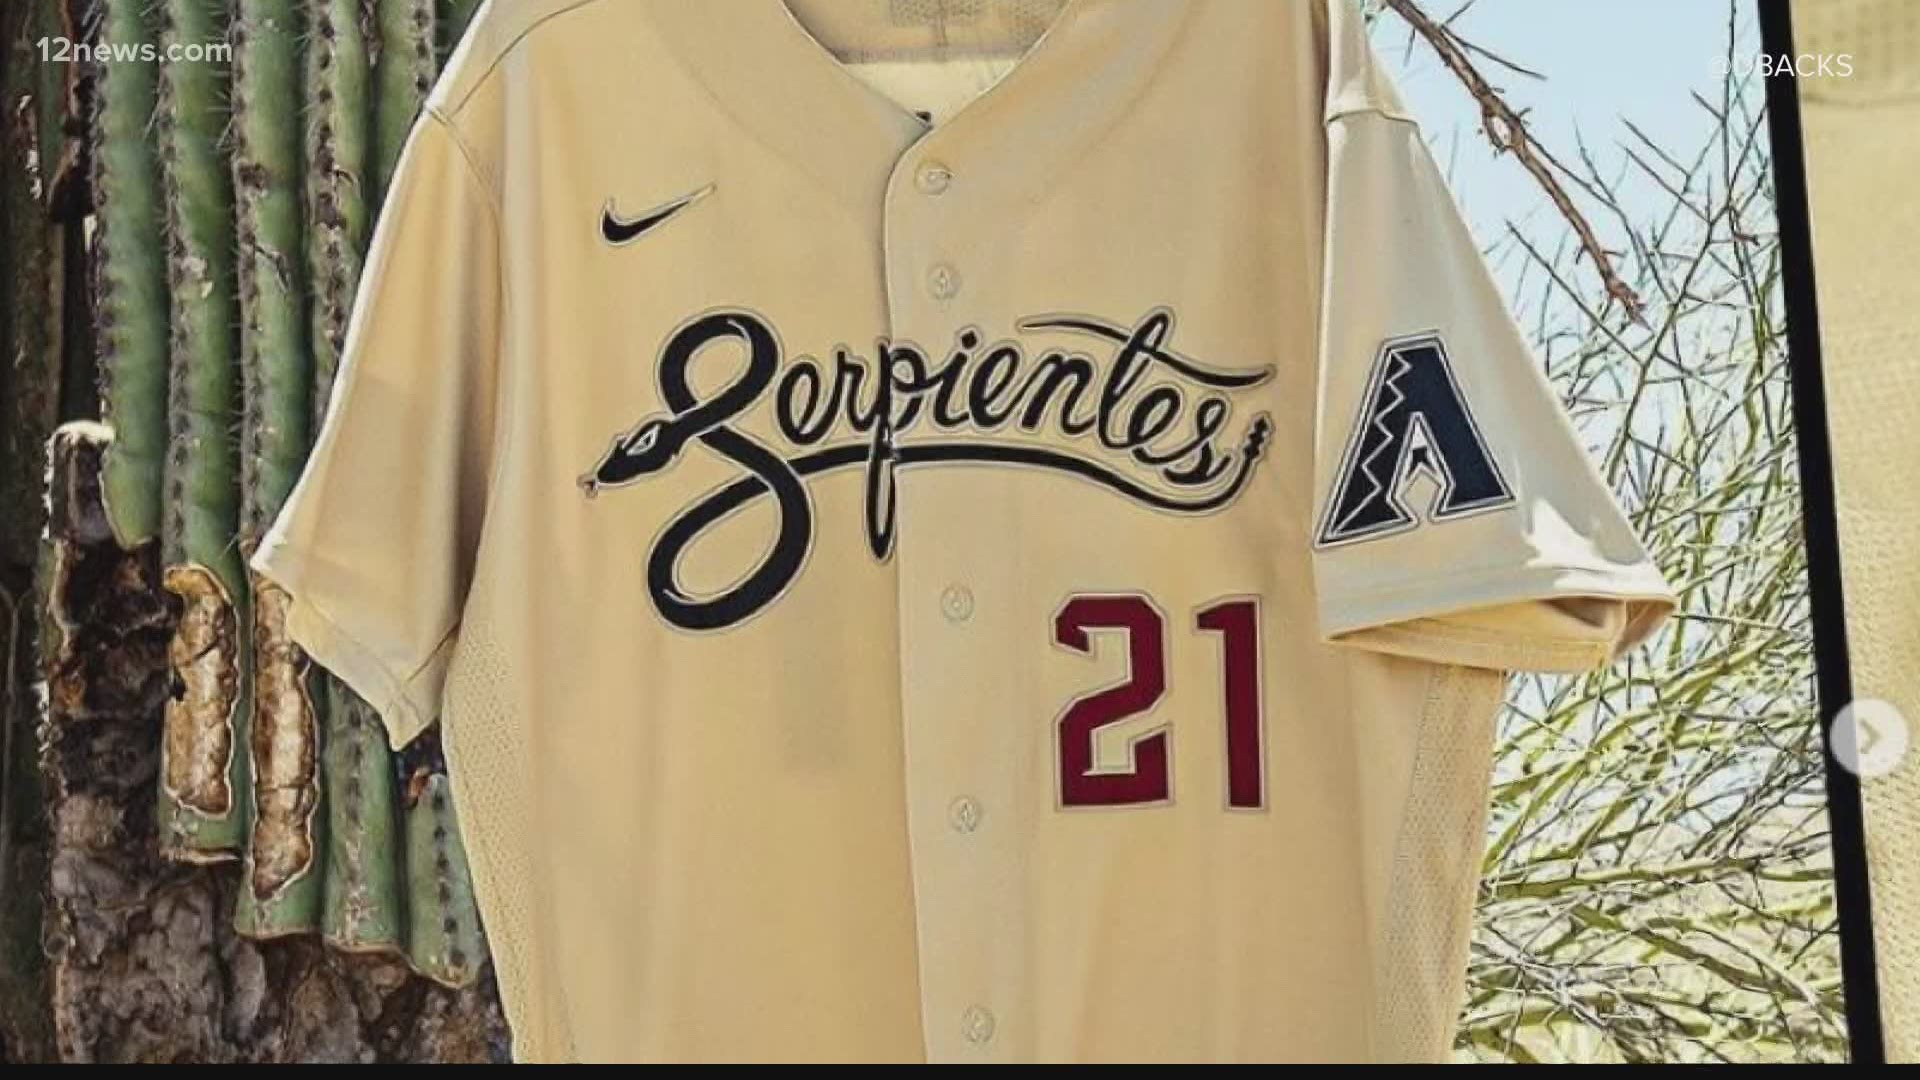 arizona diamondbacks city connect jersey